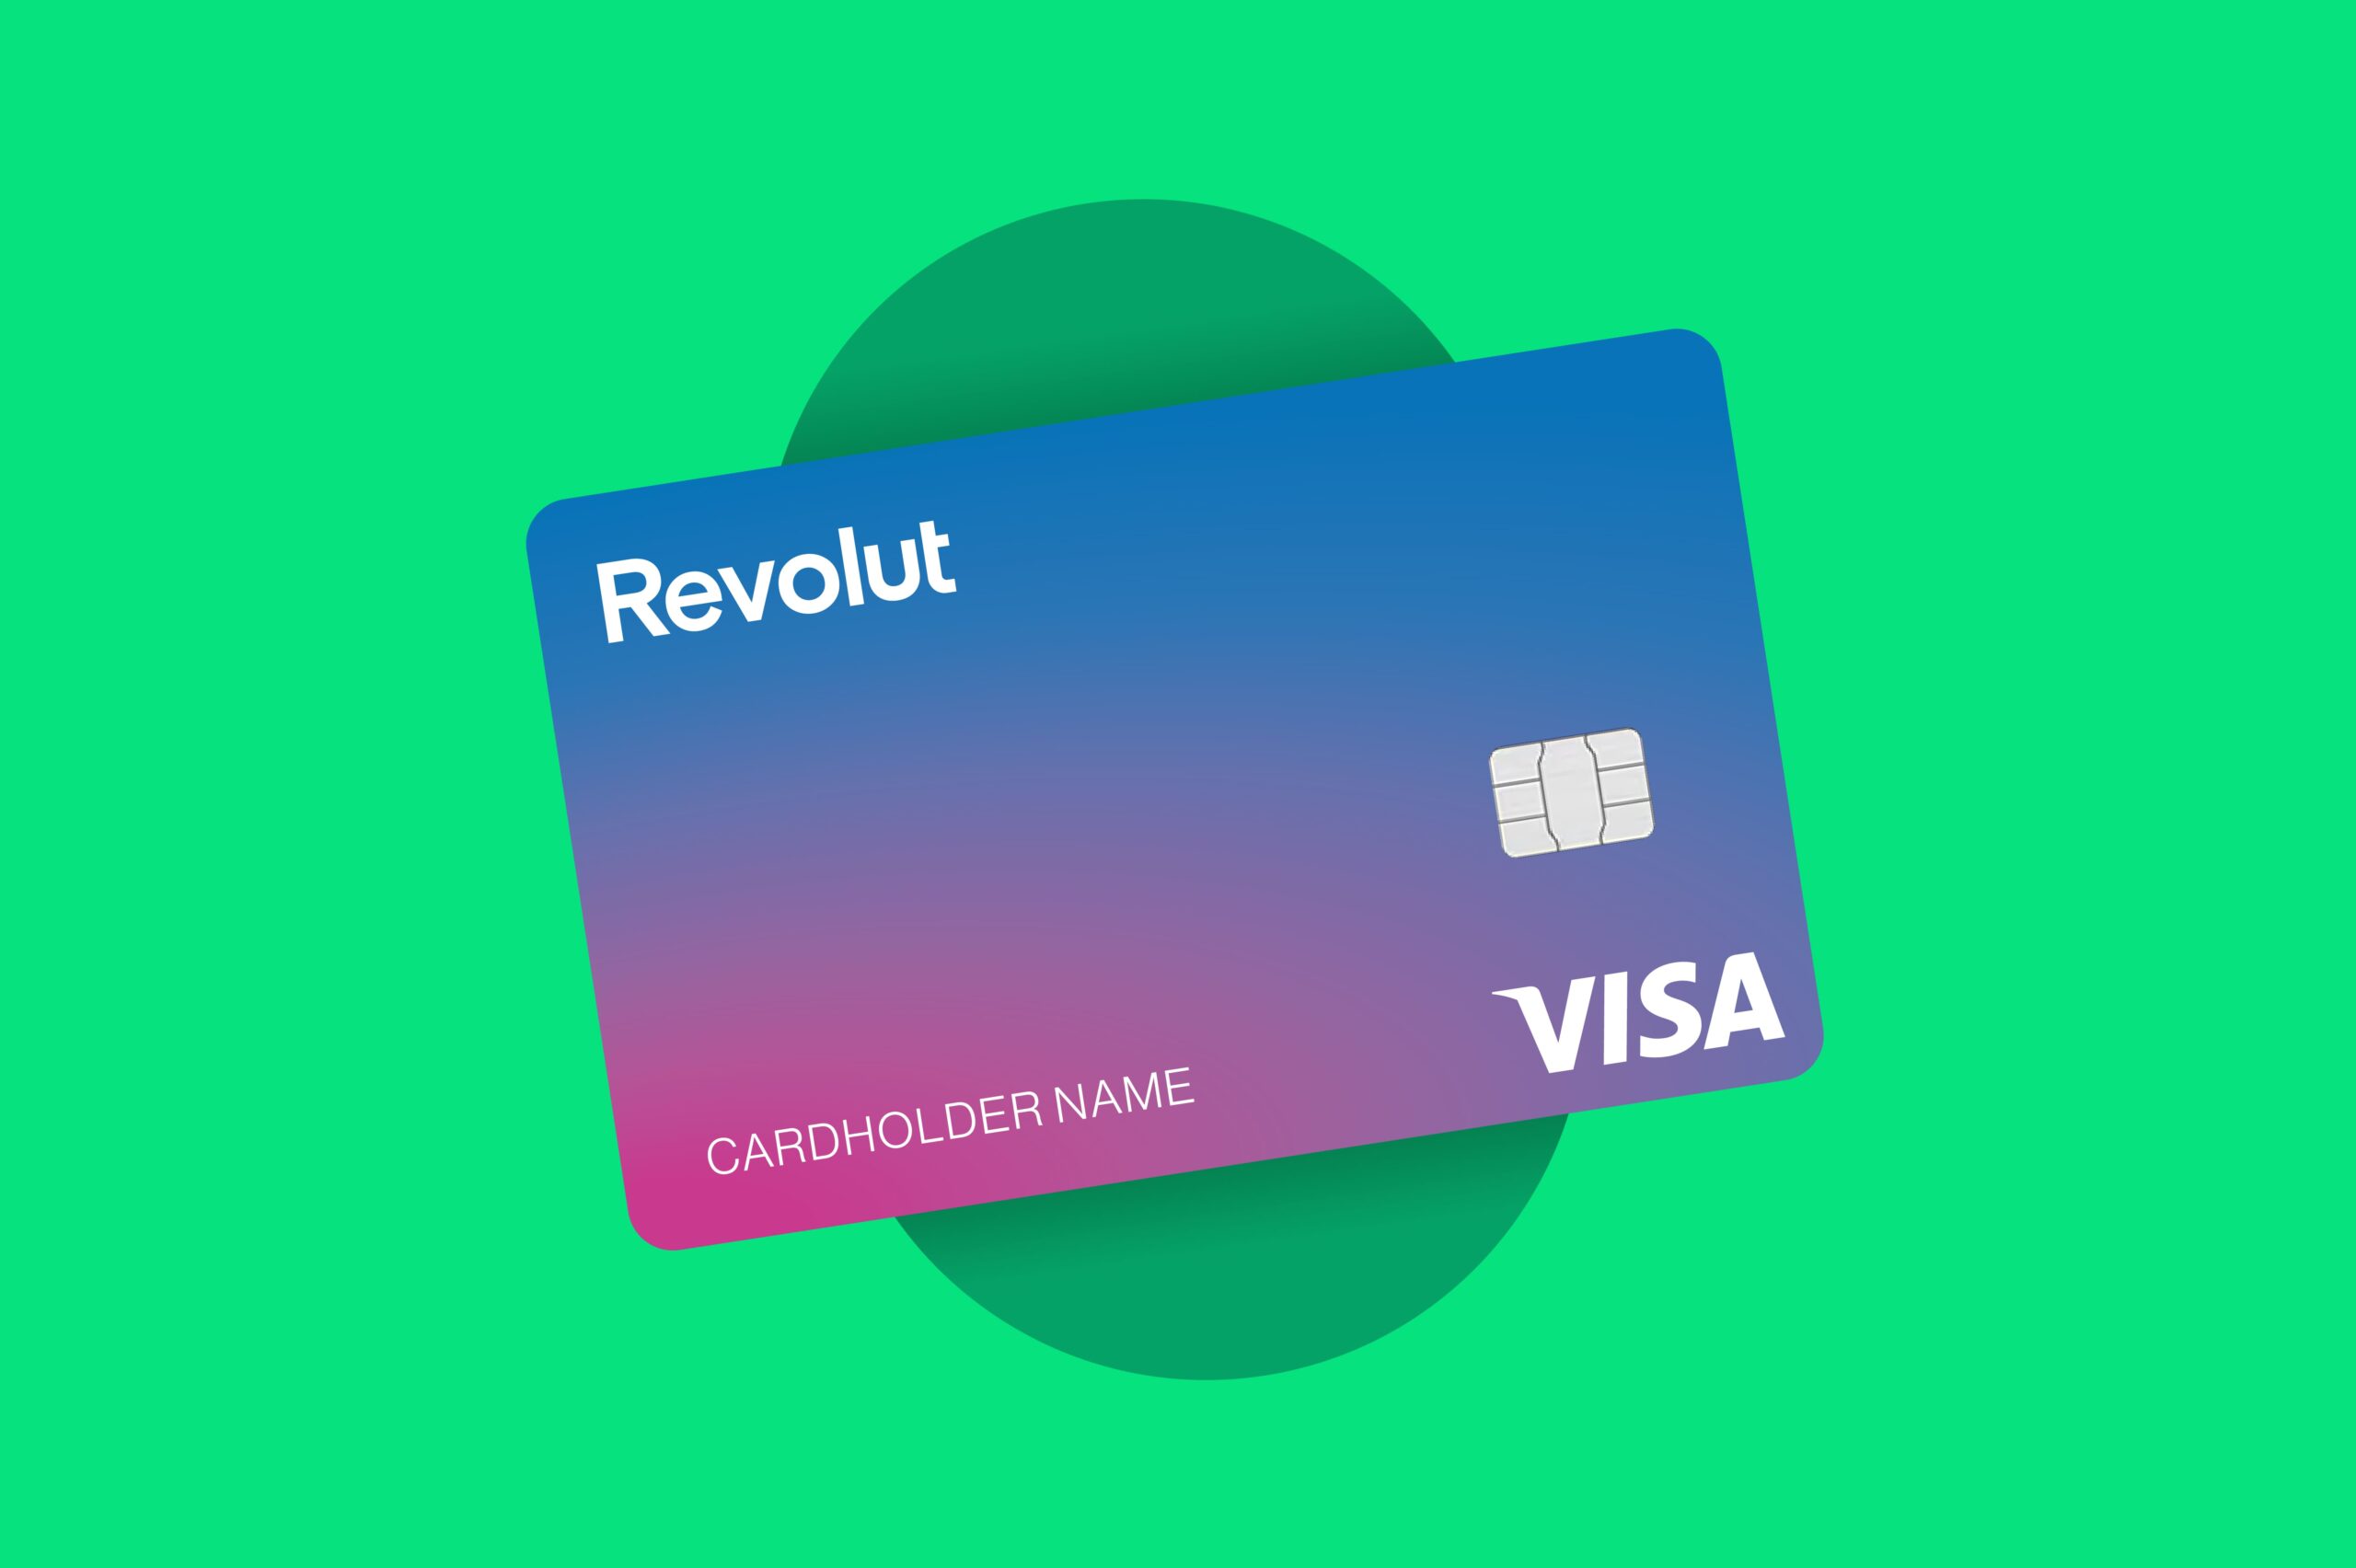 Digital Banking: Revolut’s New Phone Plans Take Flight